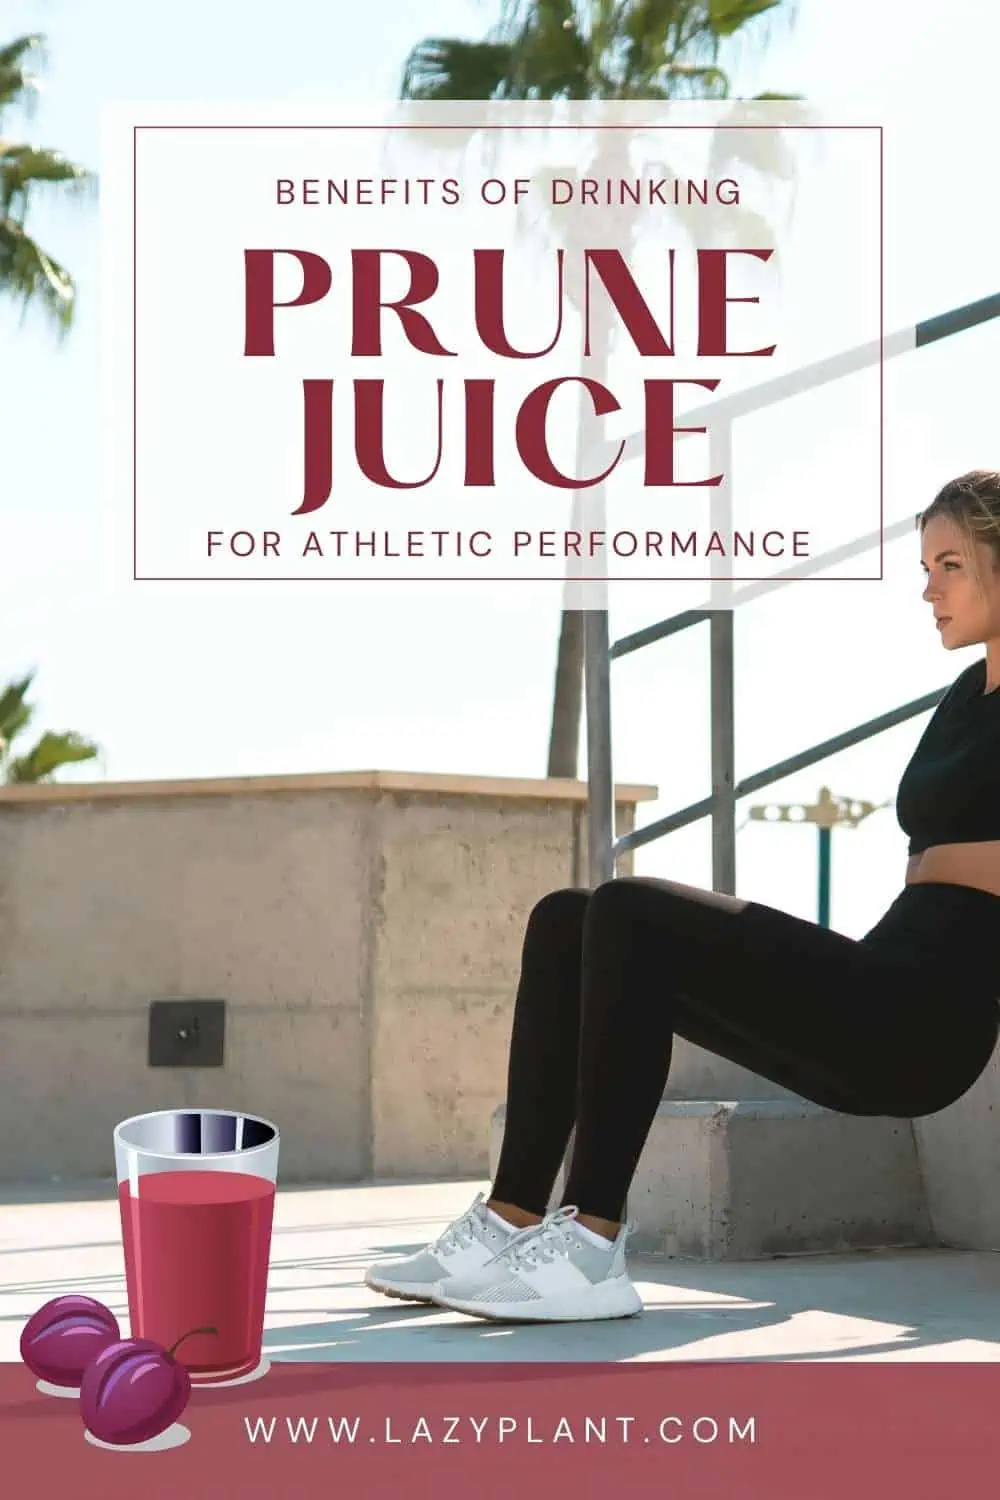 Prune juice is good for endurance performance.